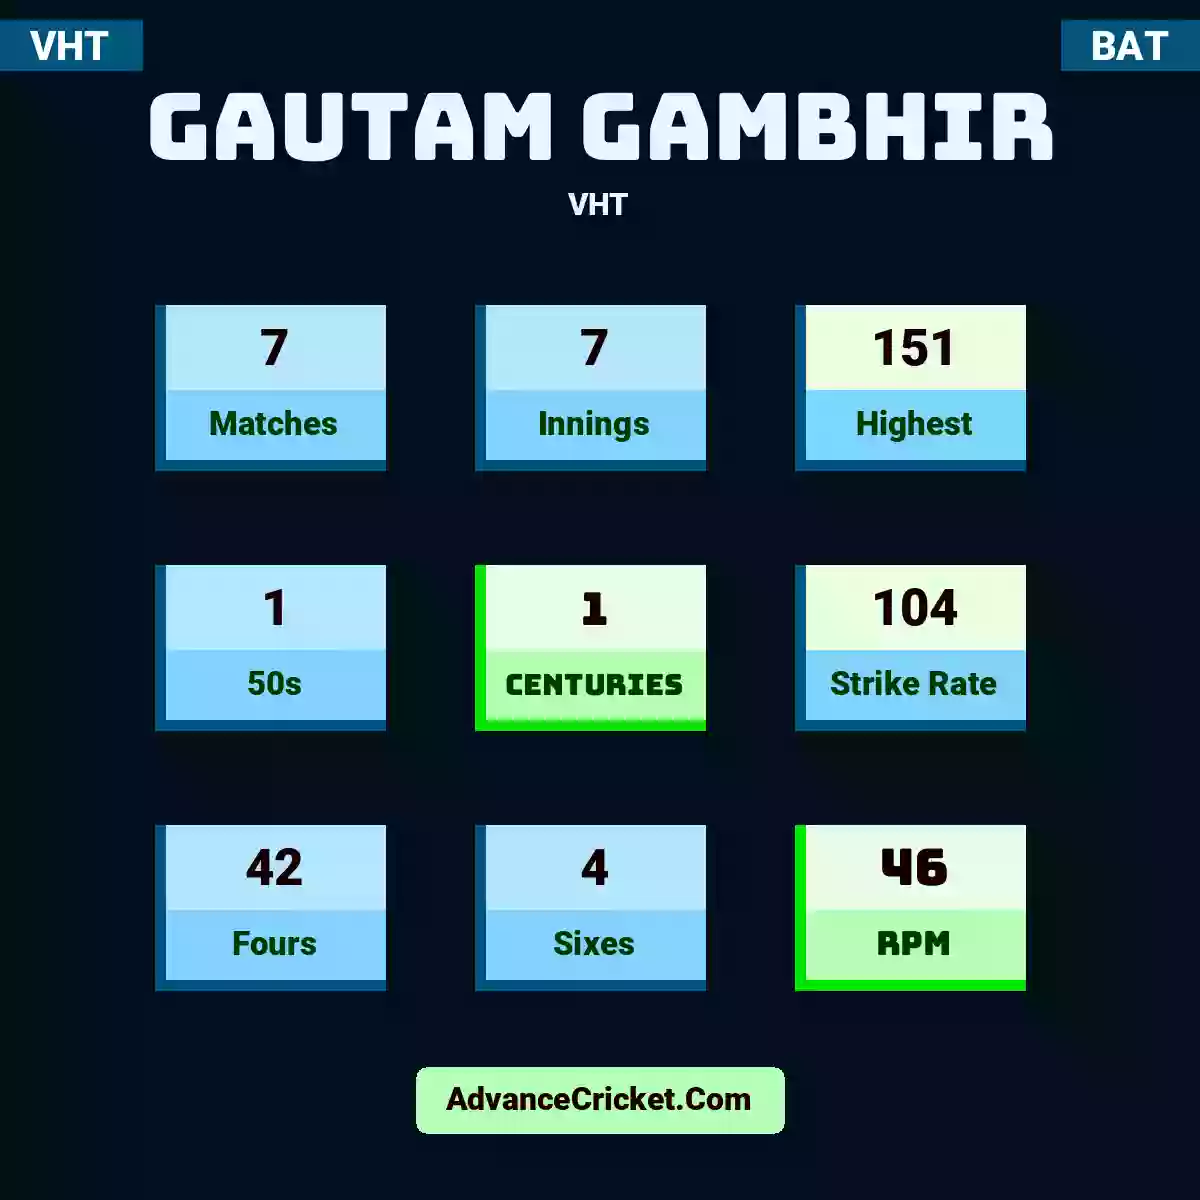 Gautam Gambhir VHT , Gautam Gambhir played 7 matches, scored 151 runs as highest, 1 half-centuries, and 1 centuries, with a strike rate of 104. G.Gambhir hit 42 fours and 4 sixes, with an RPM of 46.